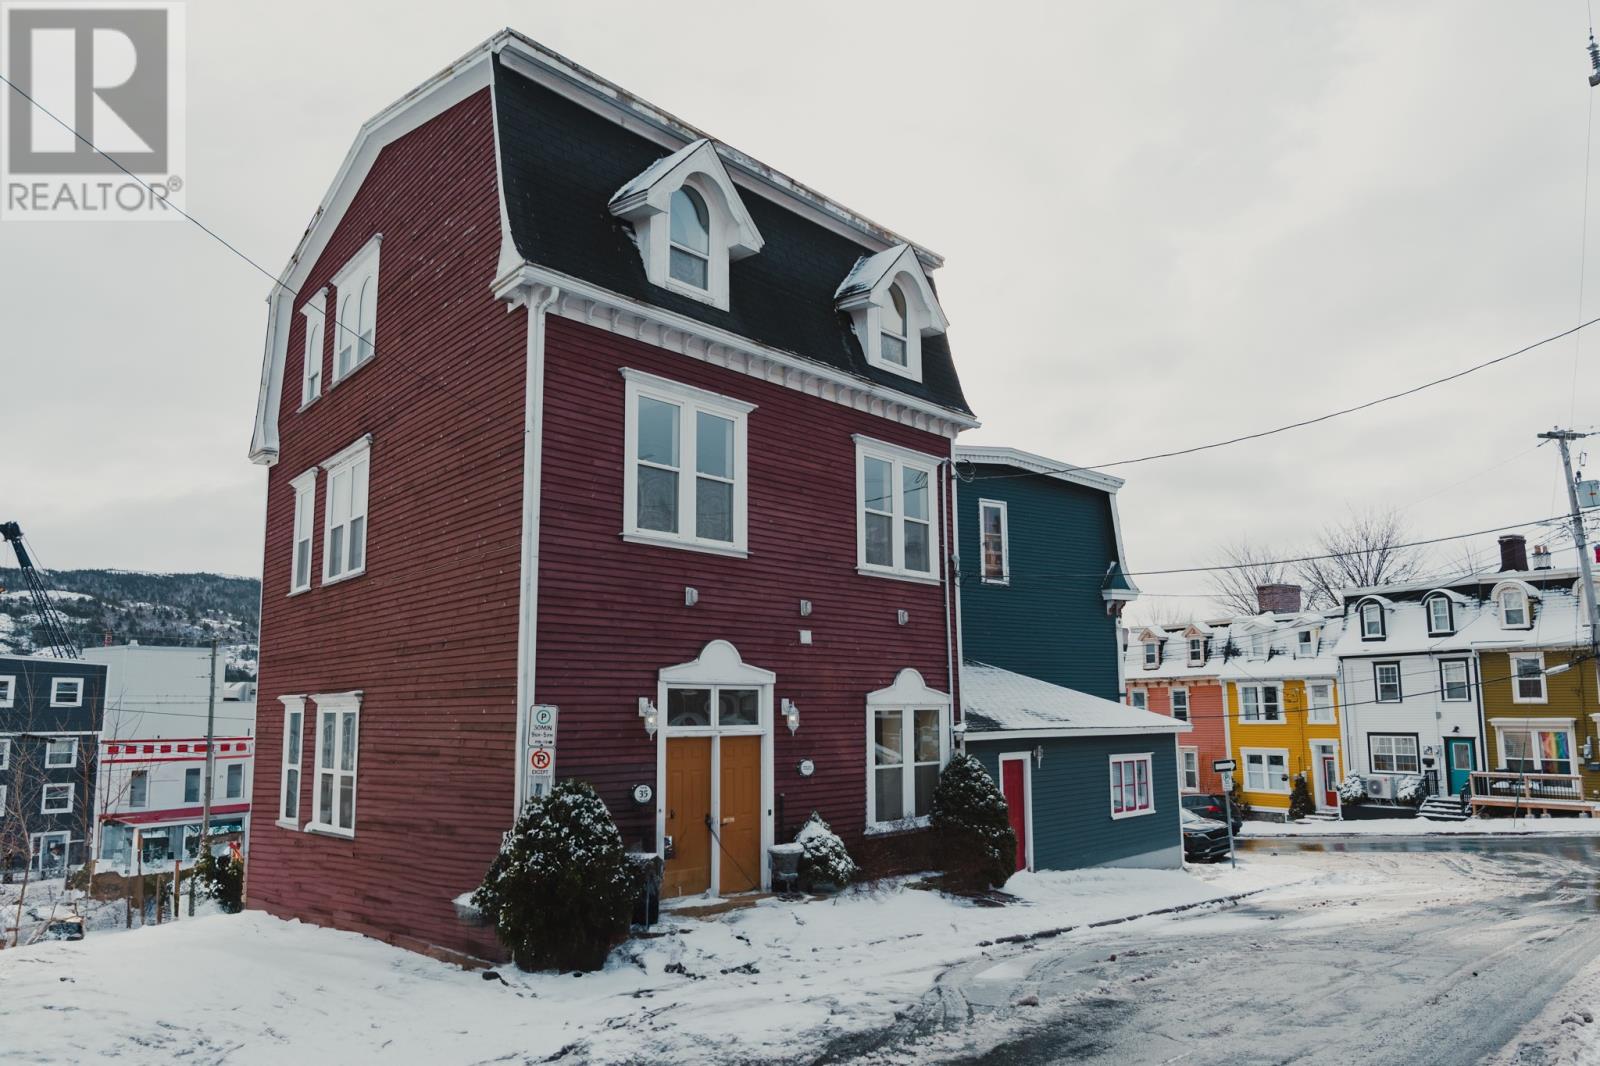 35 York Street located in St. John's, Newfoundland and Labrador